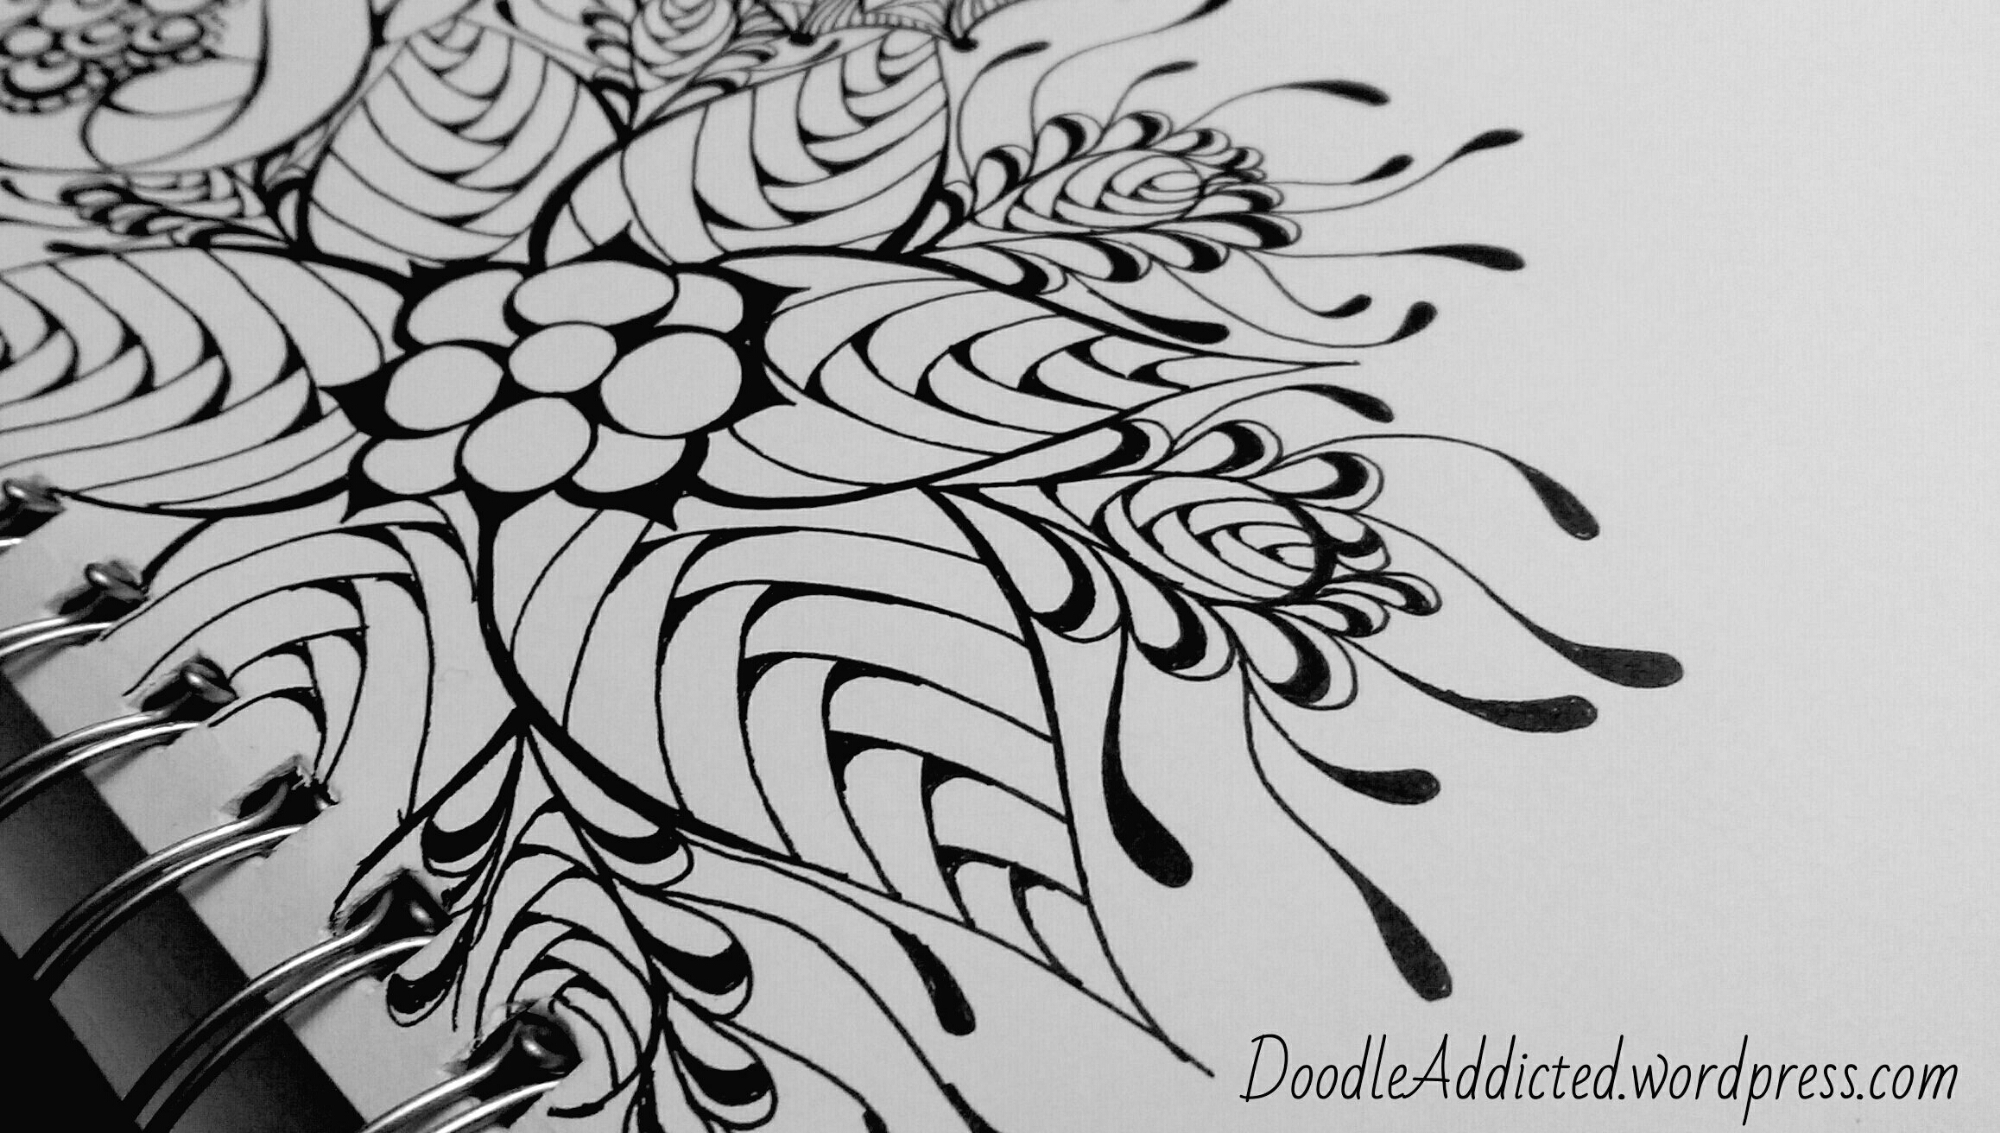 Blossom Pod Doodle Art Doodle Addicted